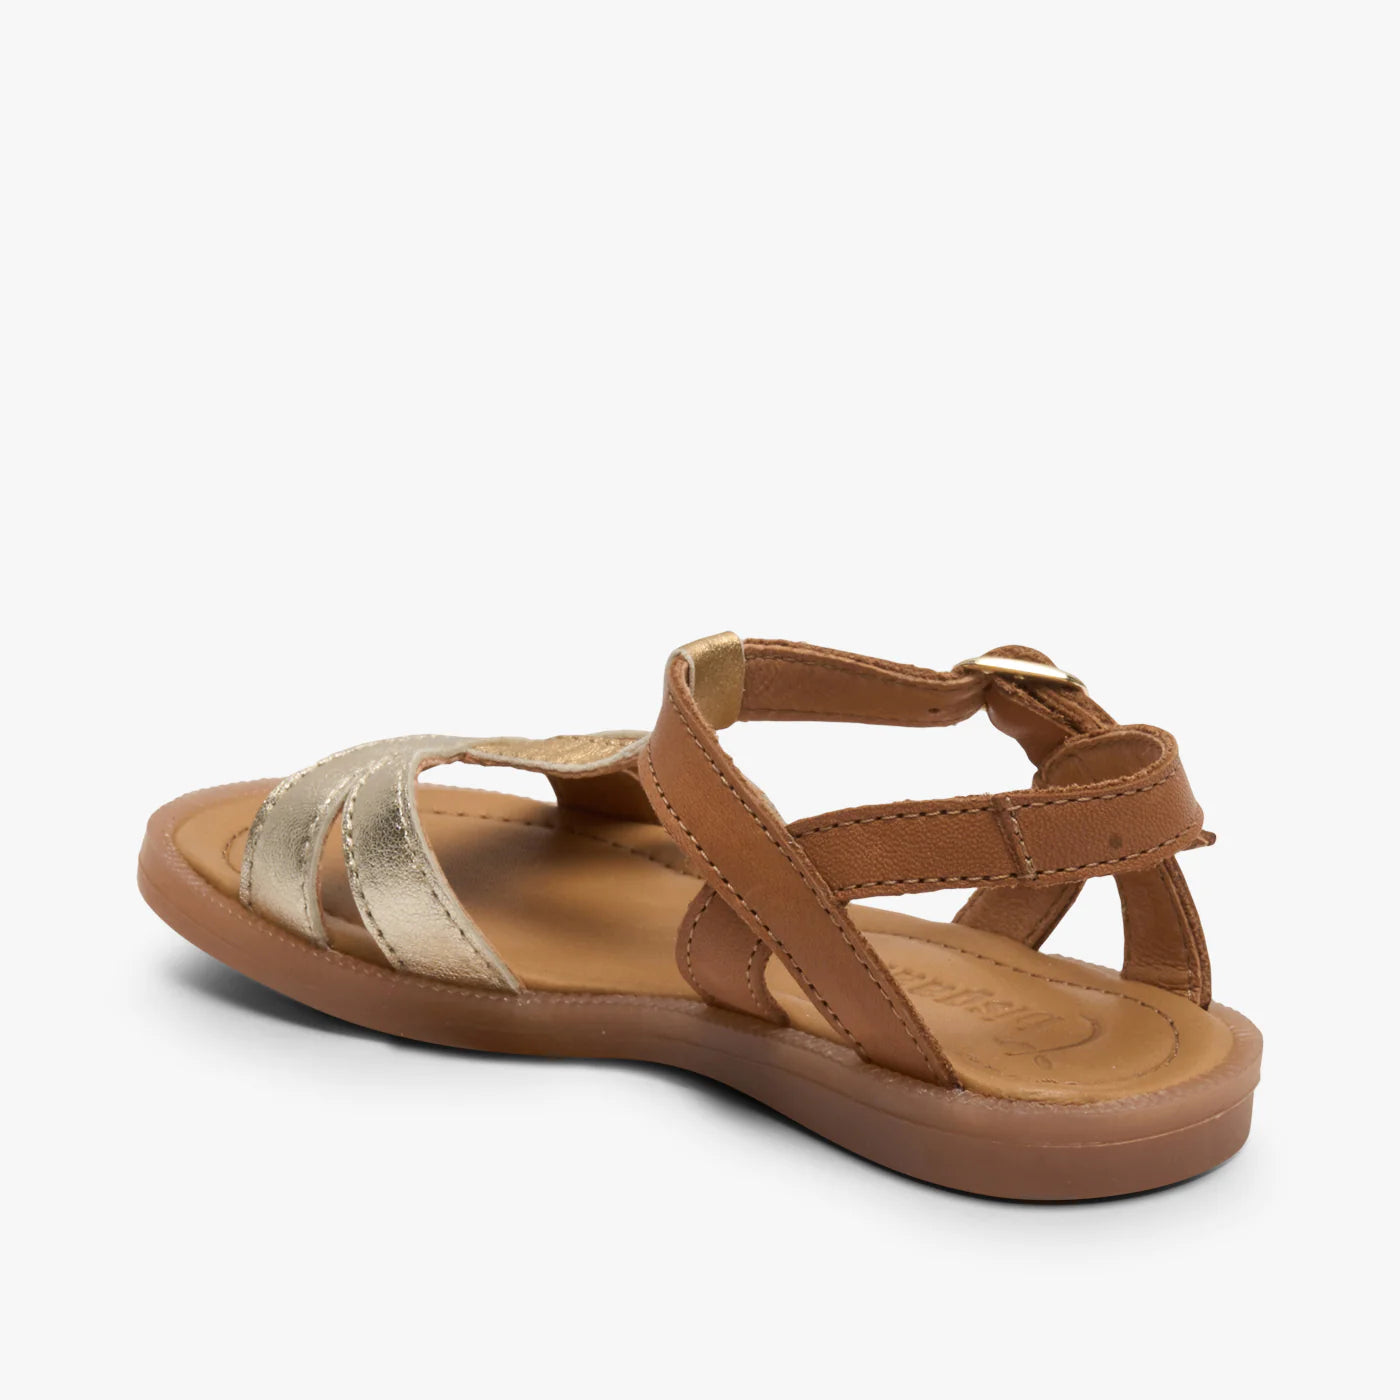 BISGAARD / Camille sandal